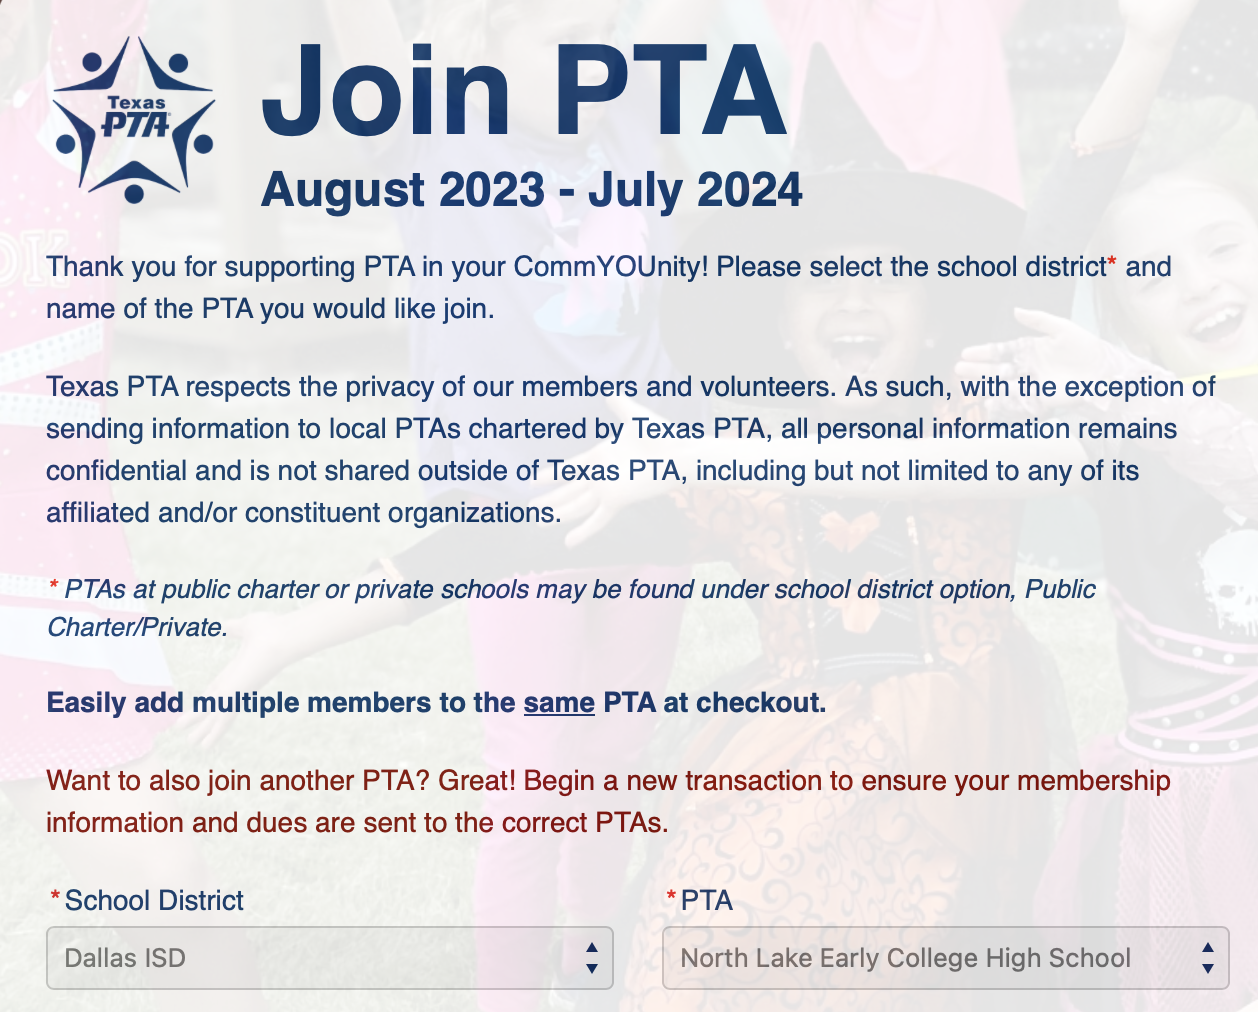  PTSA Sign Up Form